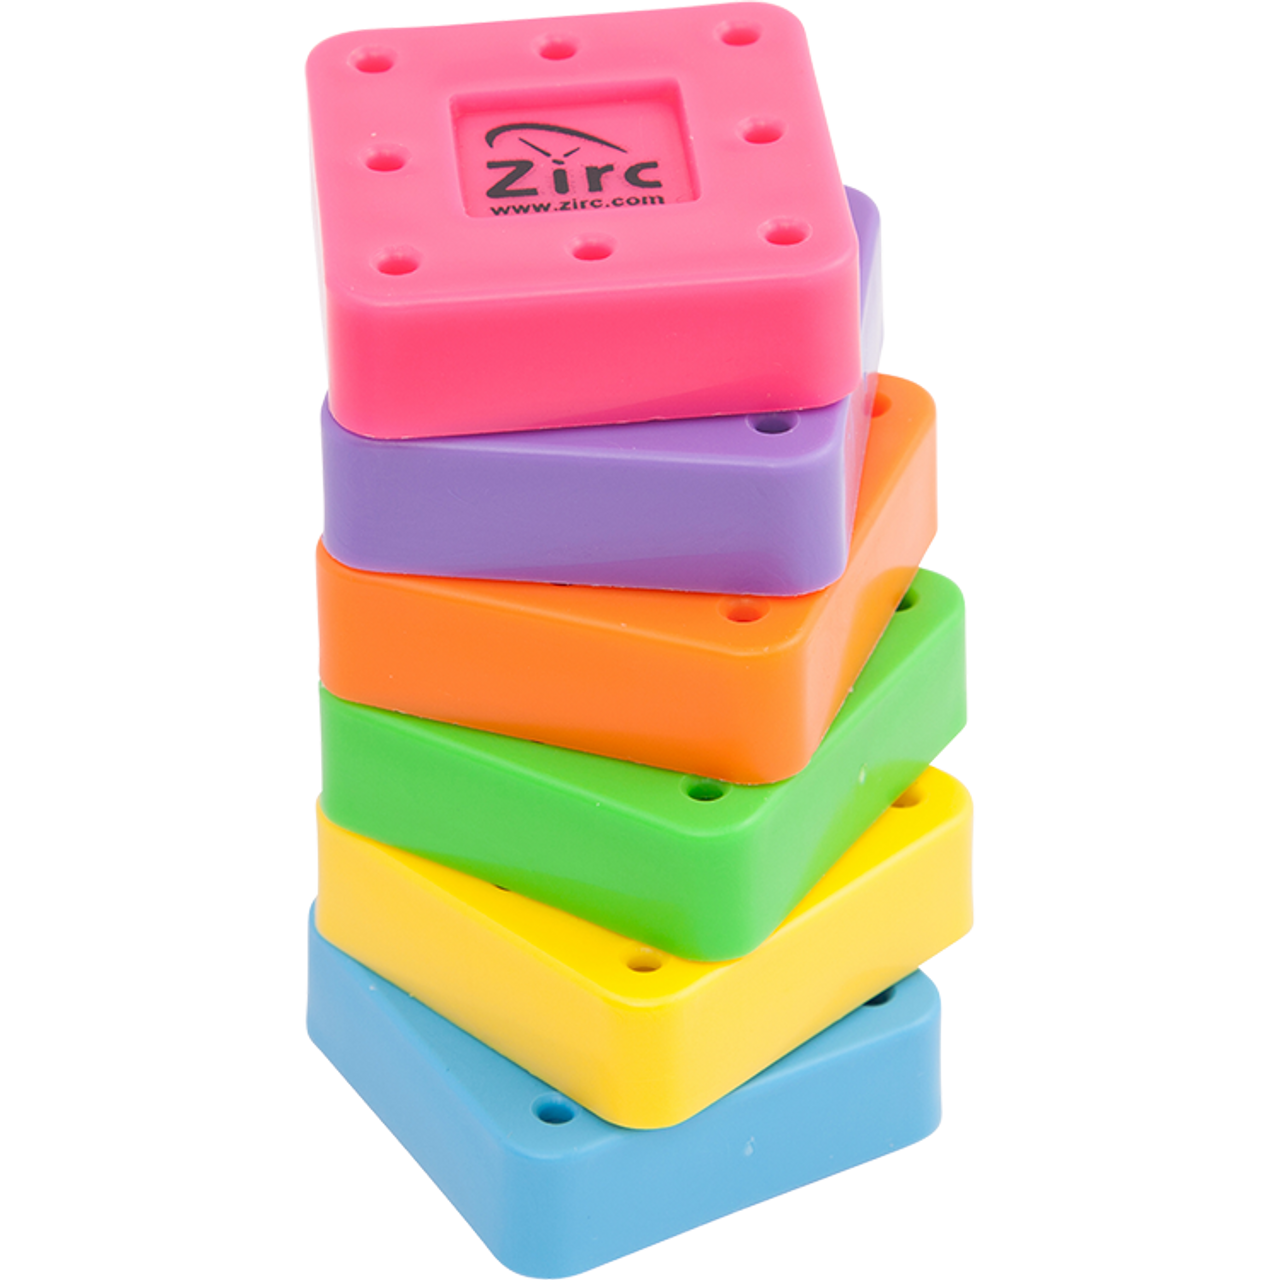 Zirc 8-Hole Magnetic Bur Blocks 1-1/2" X 1-1/2" X 1/2" - Neon Pink, ea